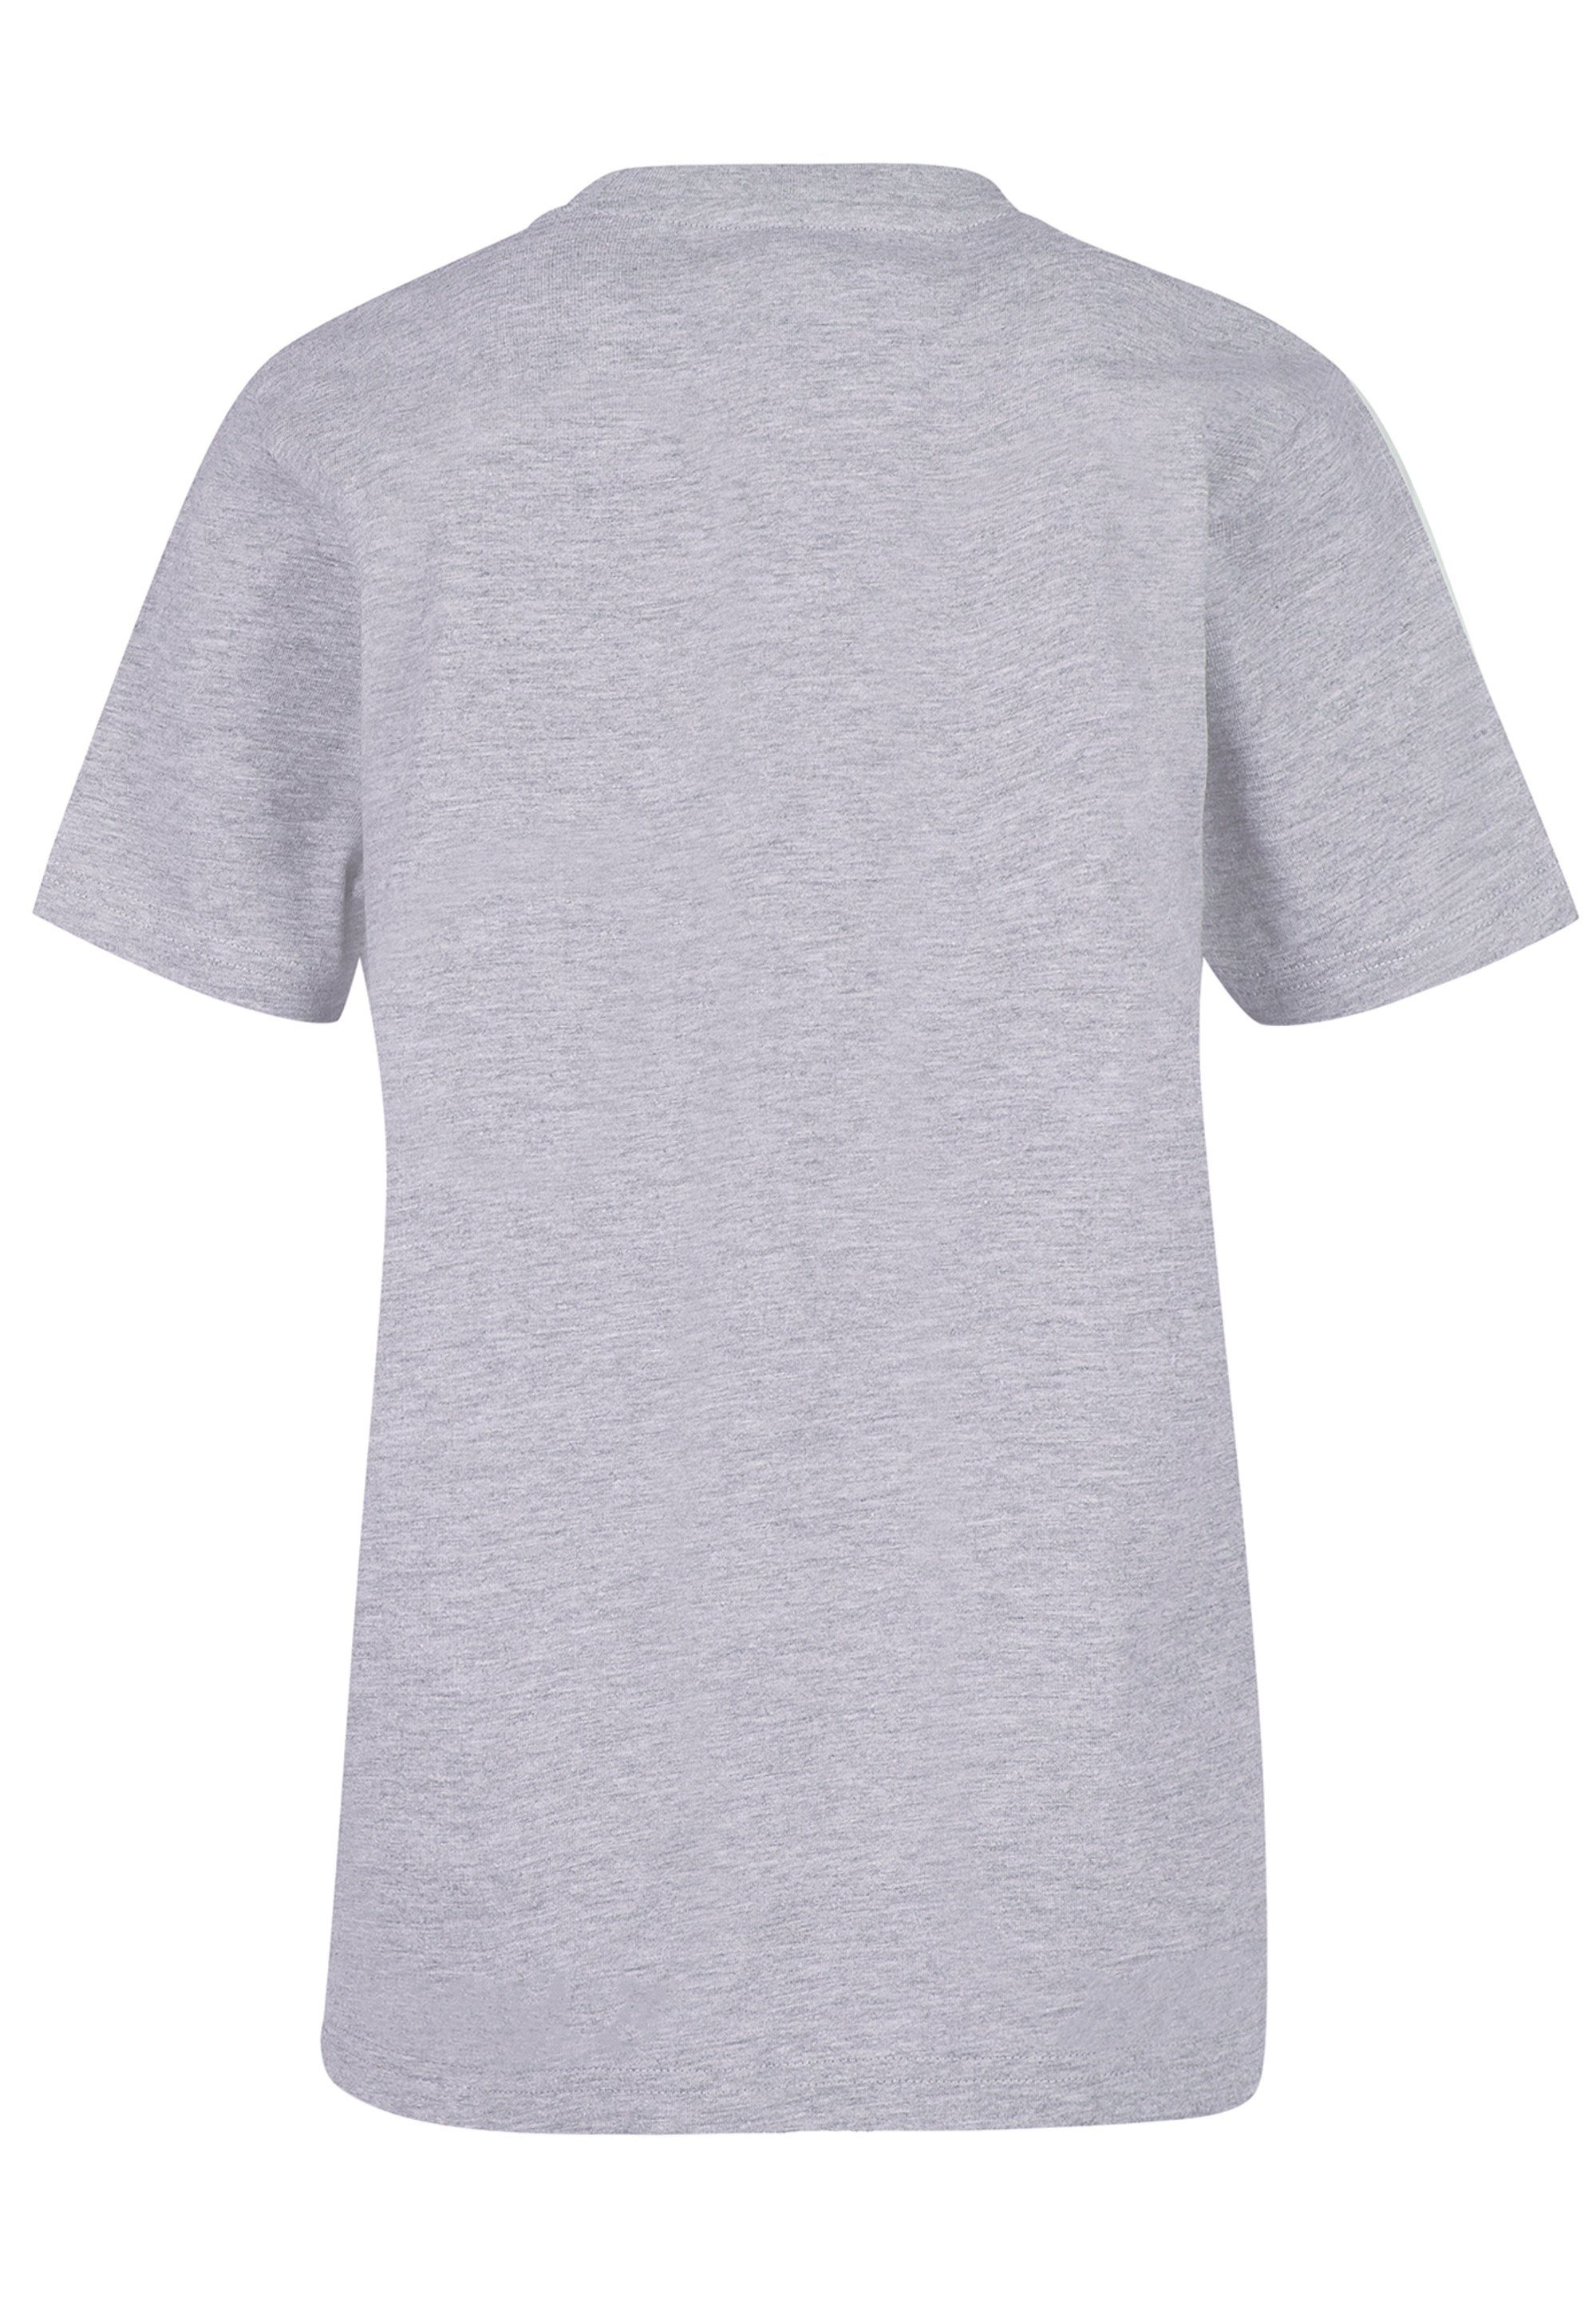 F4NT4STIC T-Shirt Skateboarder Print heather grey